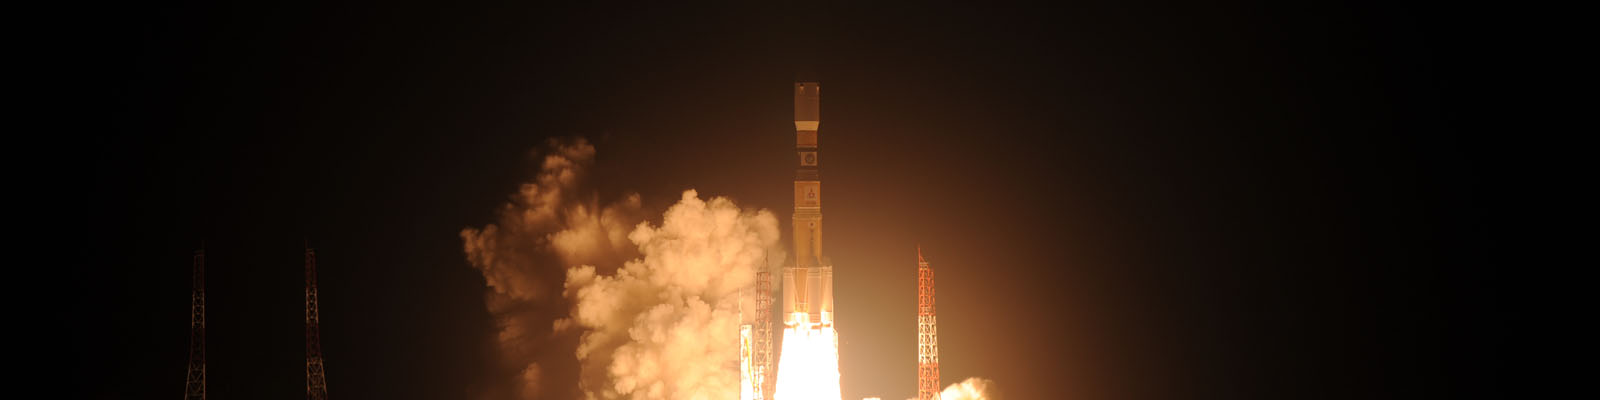 htv-7 lancement